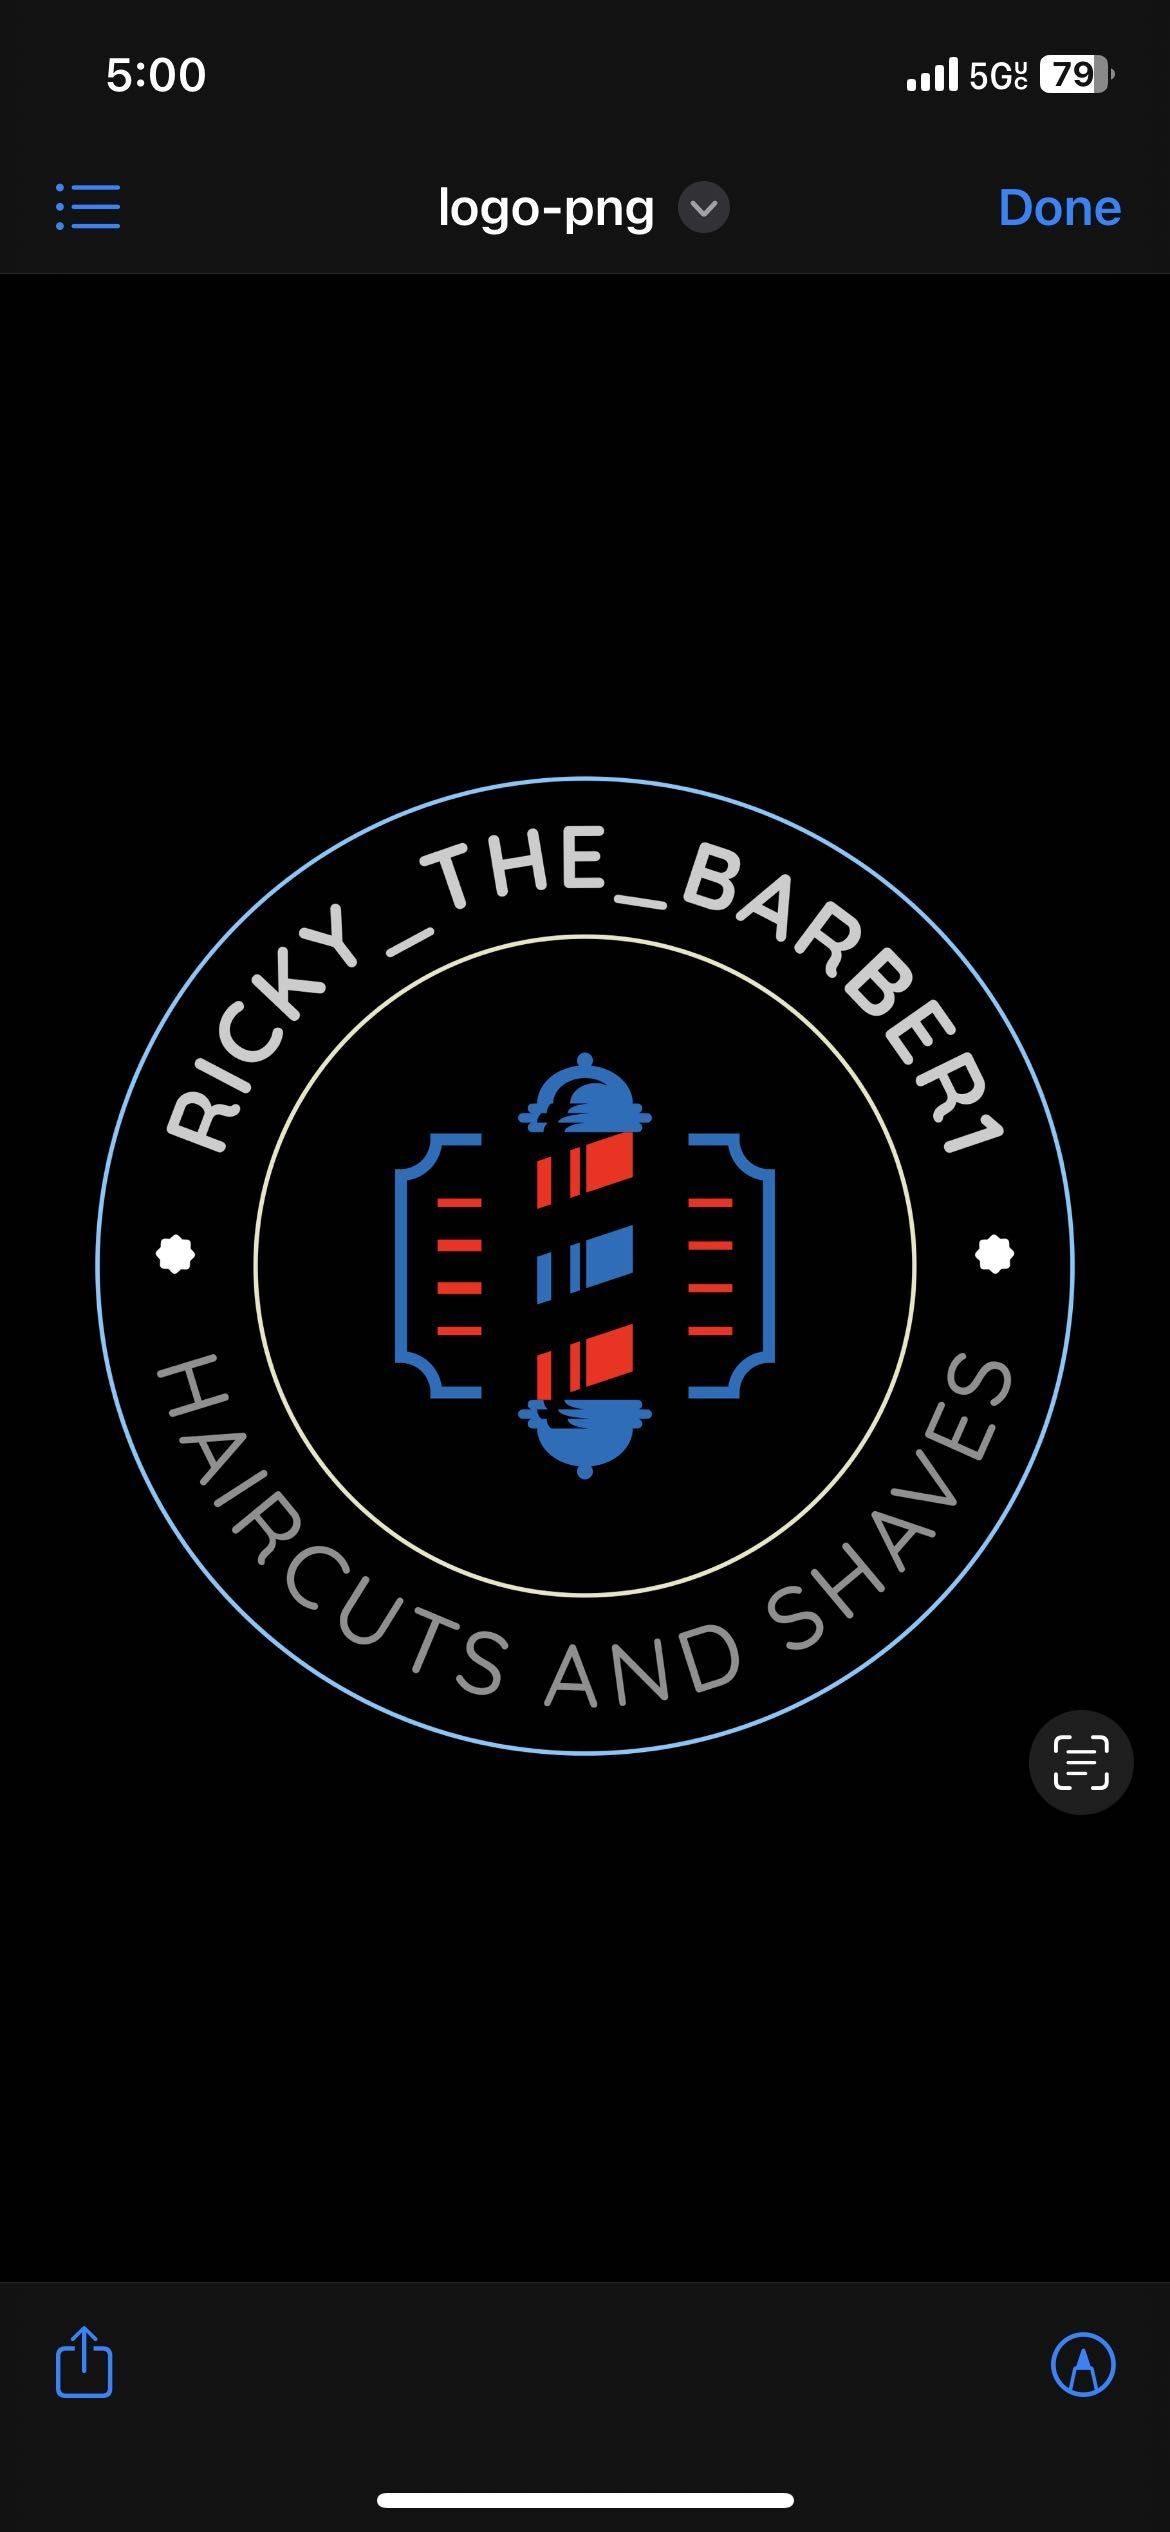 Ricky_the_barber, 857 W Gardena Blvd, Gardena, 90247